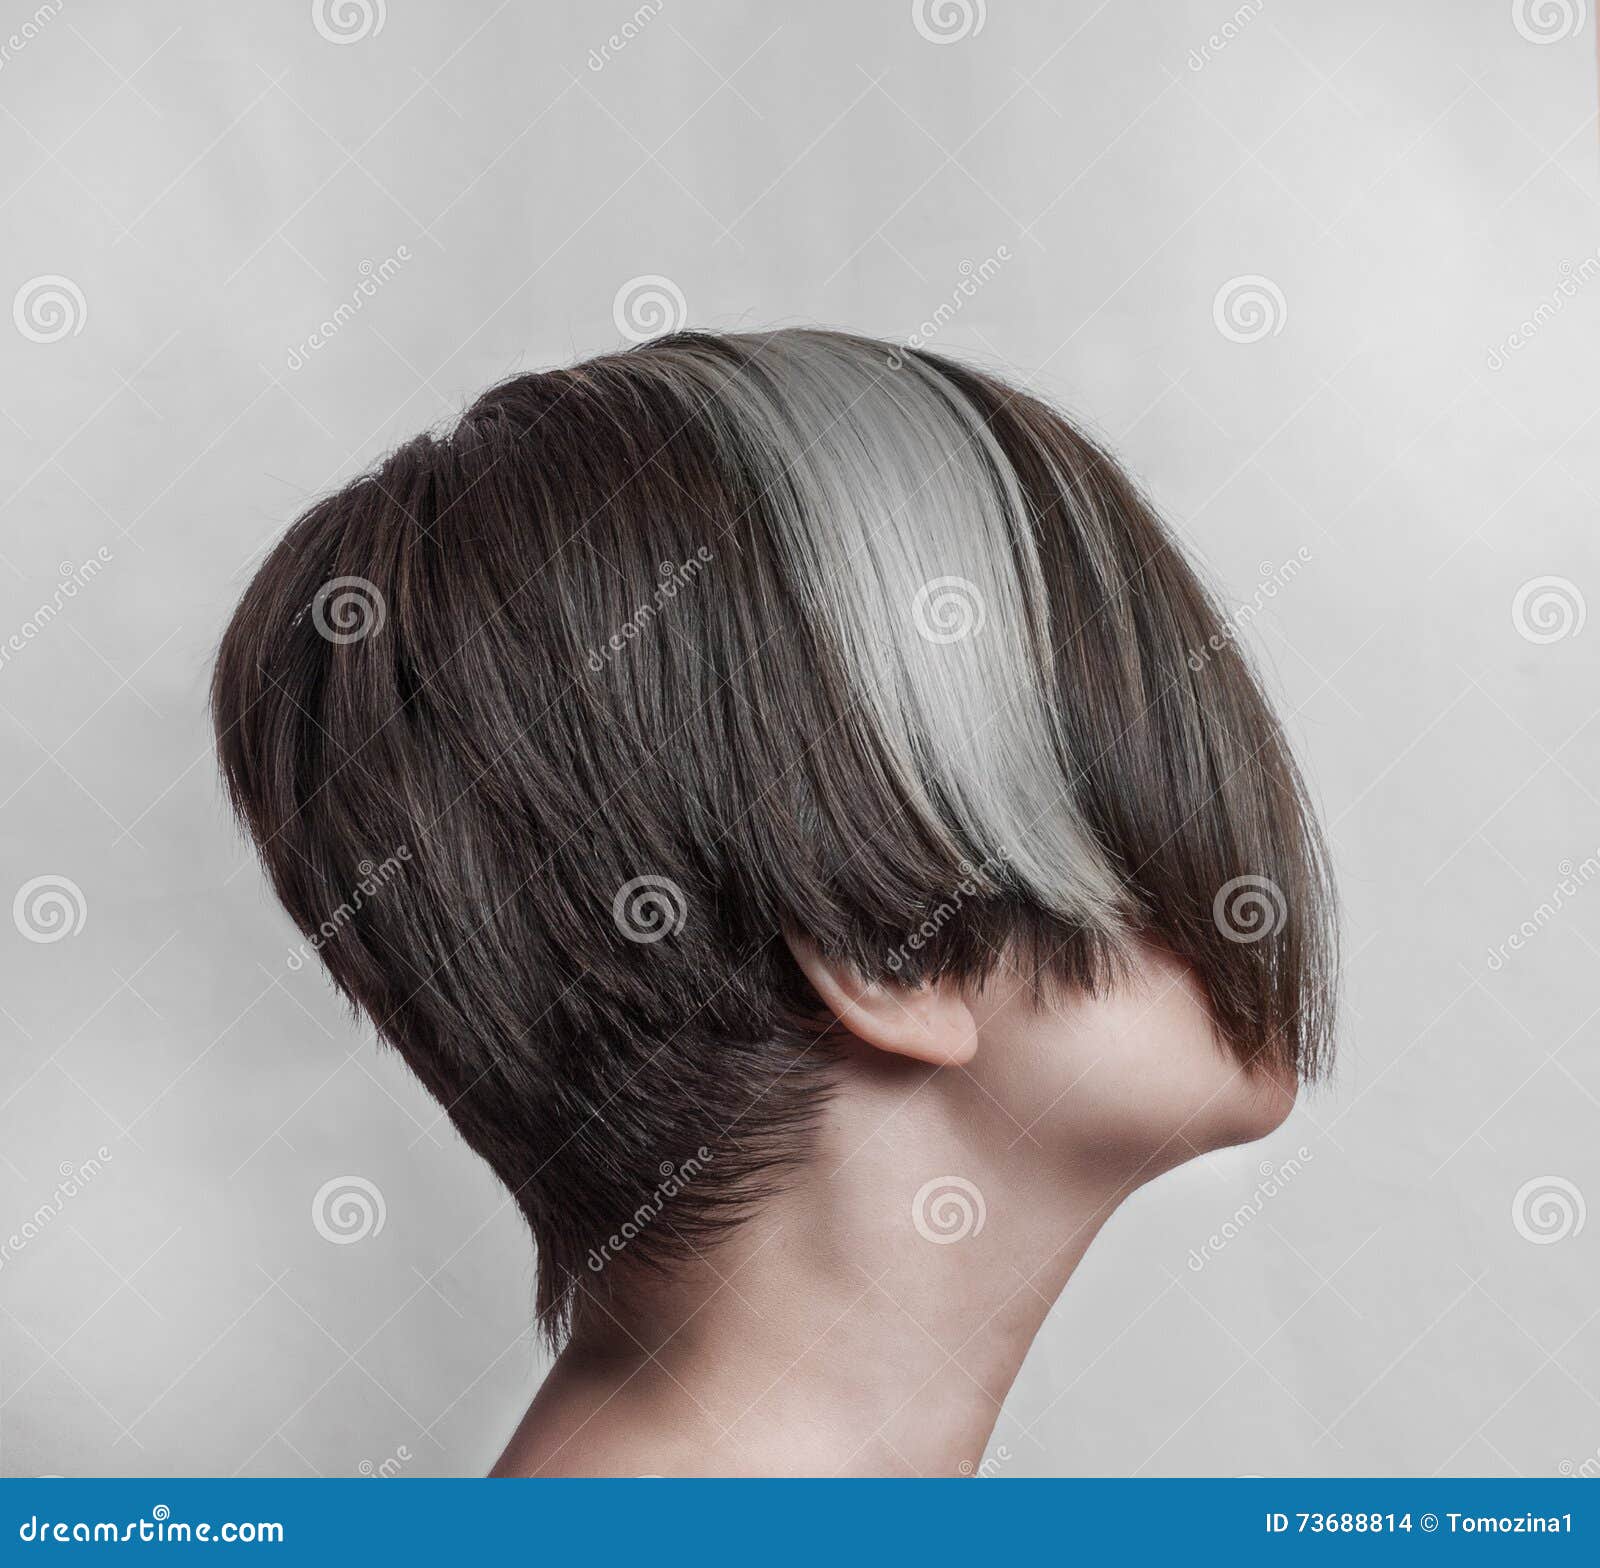 Haircut stock photo. Image of girl, creative, hair, closeup - 73688814